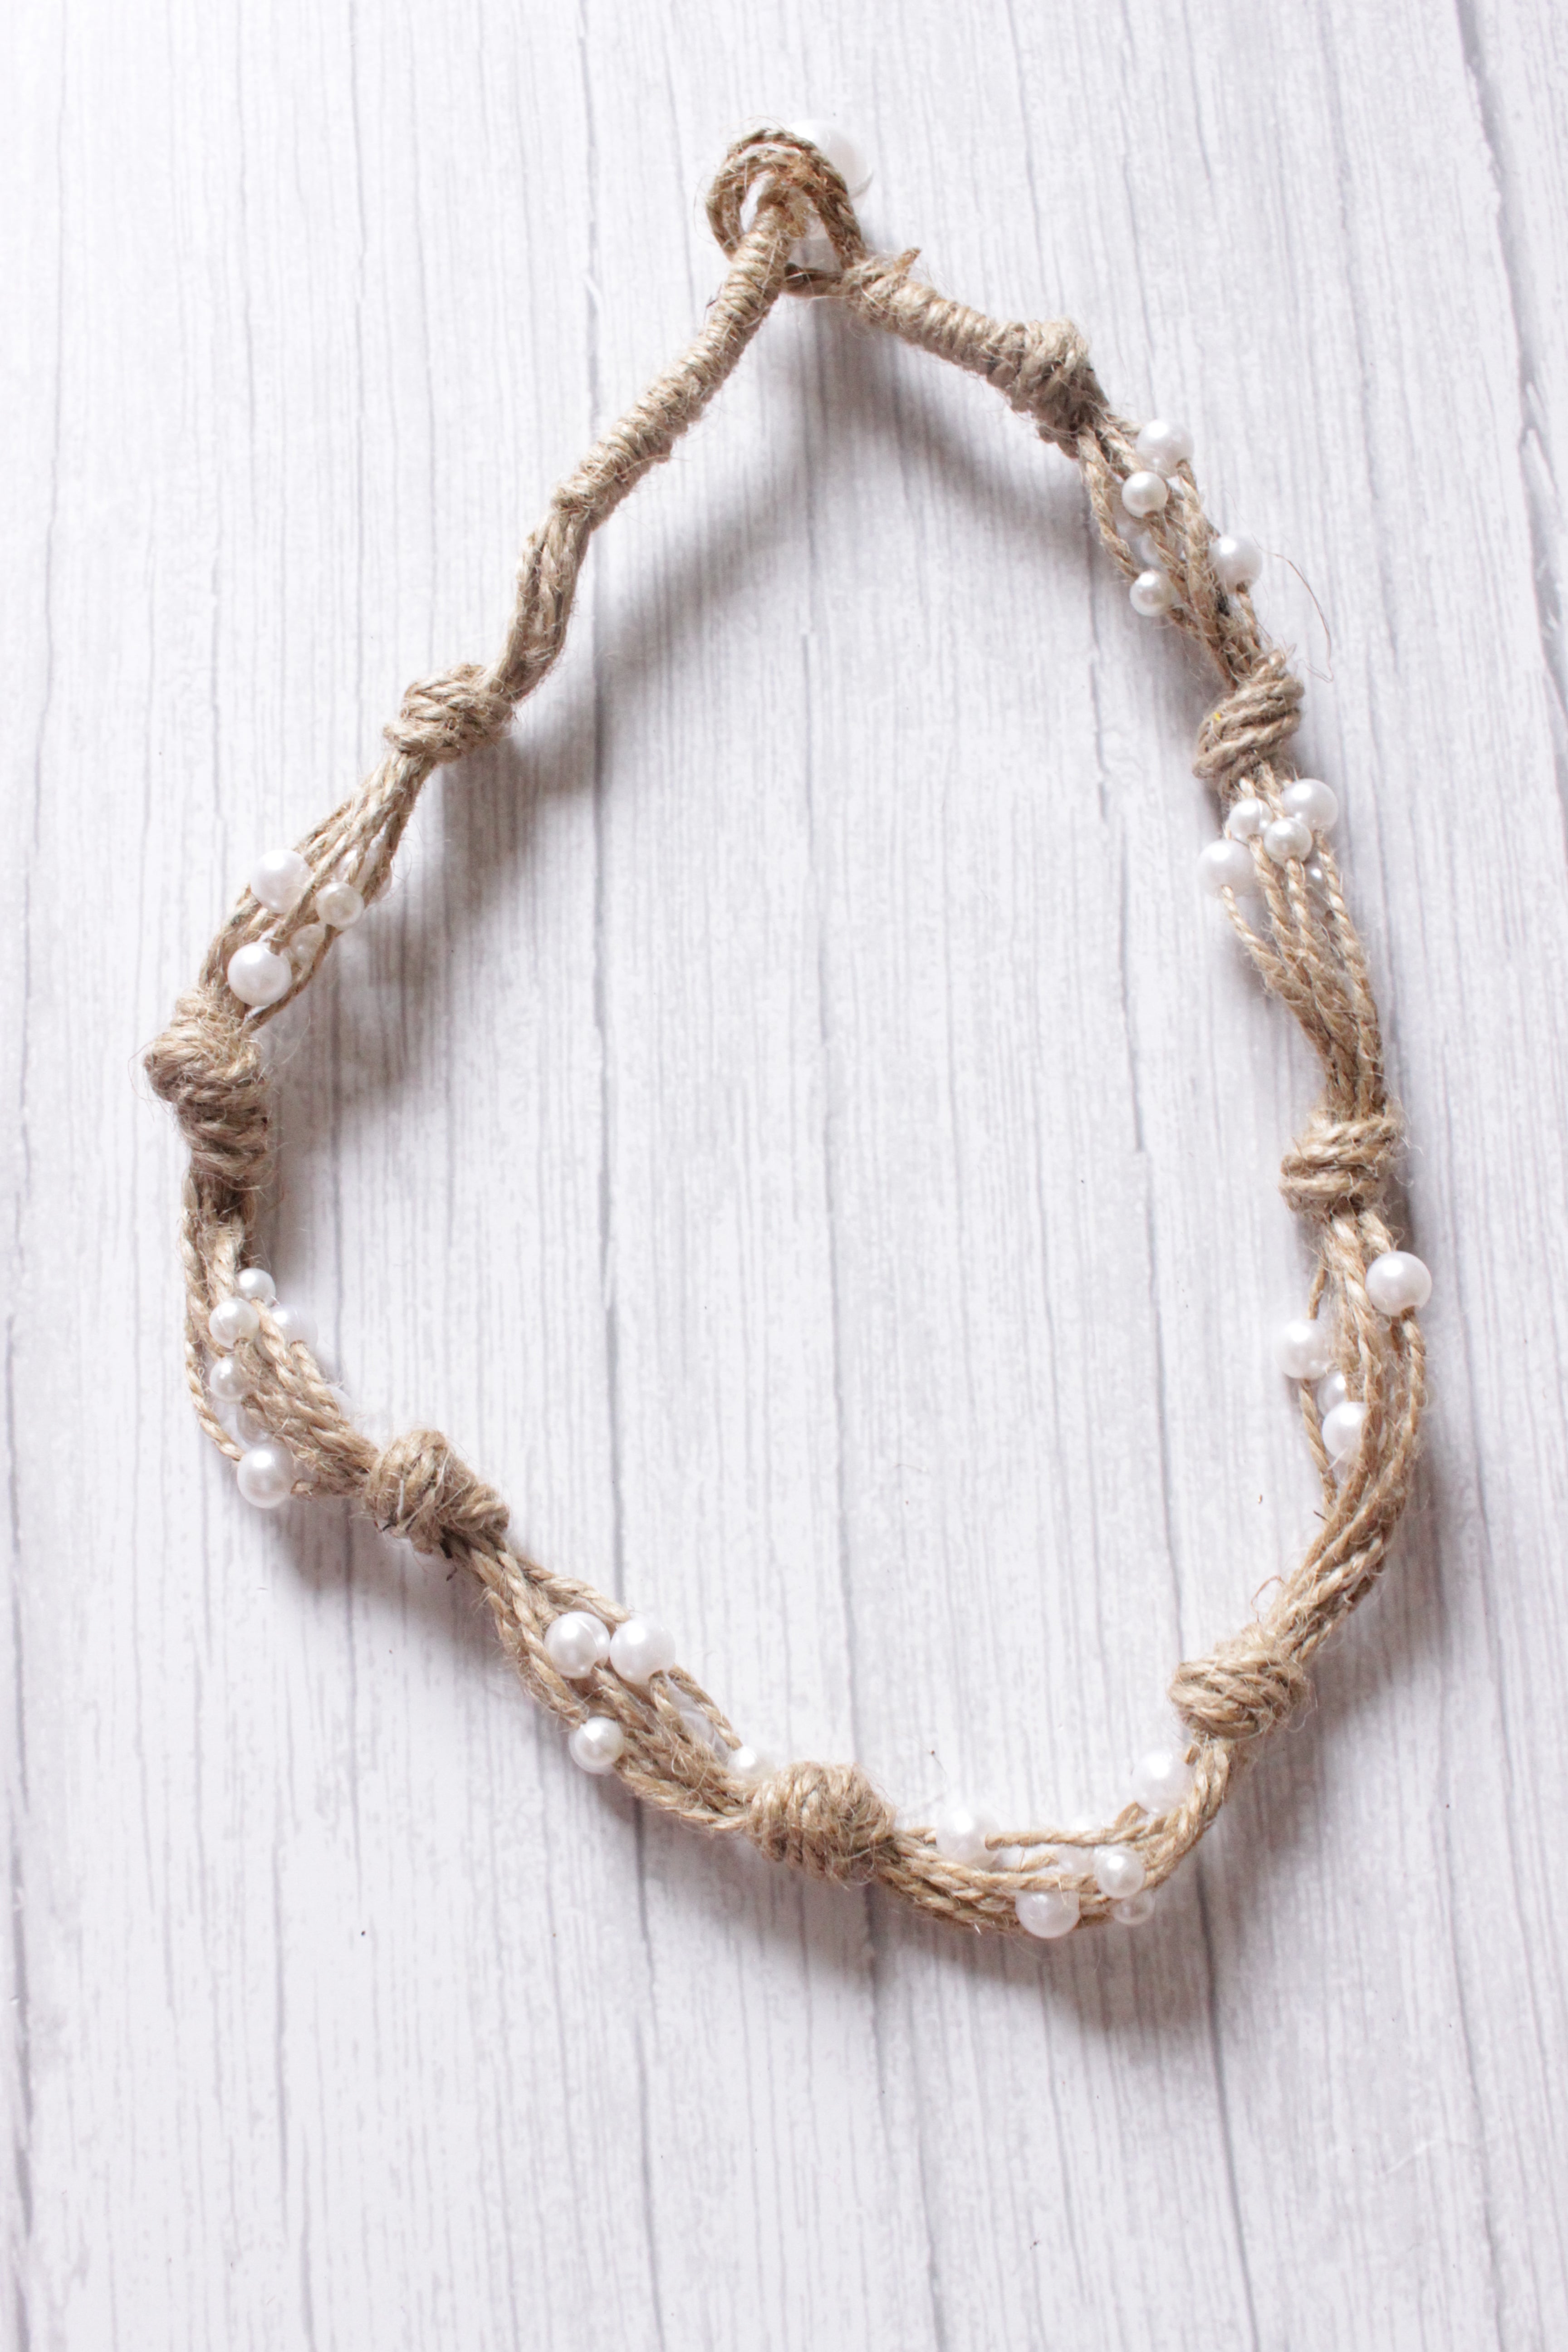 Stringed Jute Strings White Beads Embellished Choker Necklace